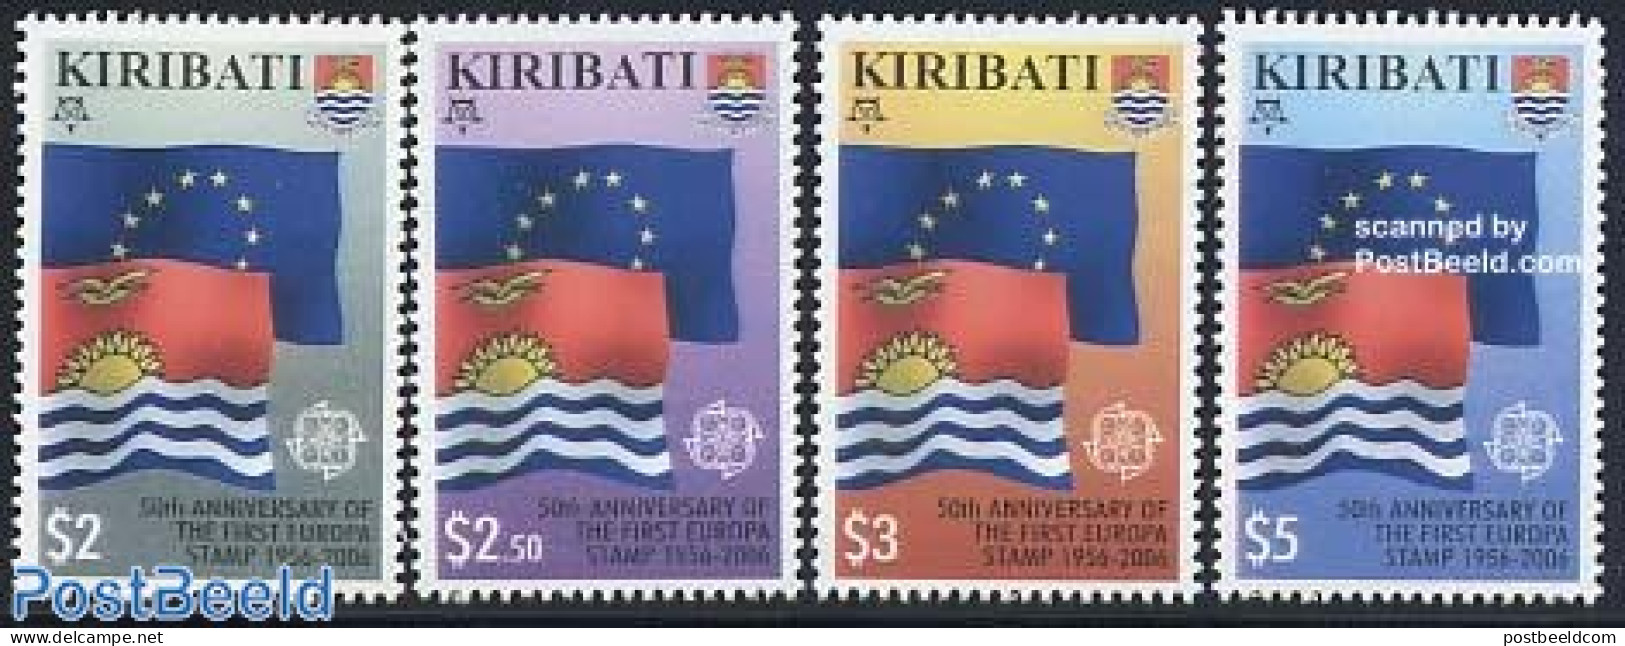 Kiribati 2006 50 Years Europa Stamps 4v, Mint NH, History - Europa Hang-on Issues - Flags - European Ideas